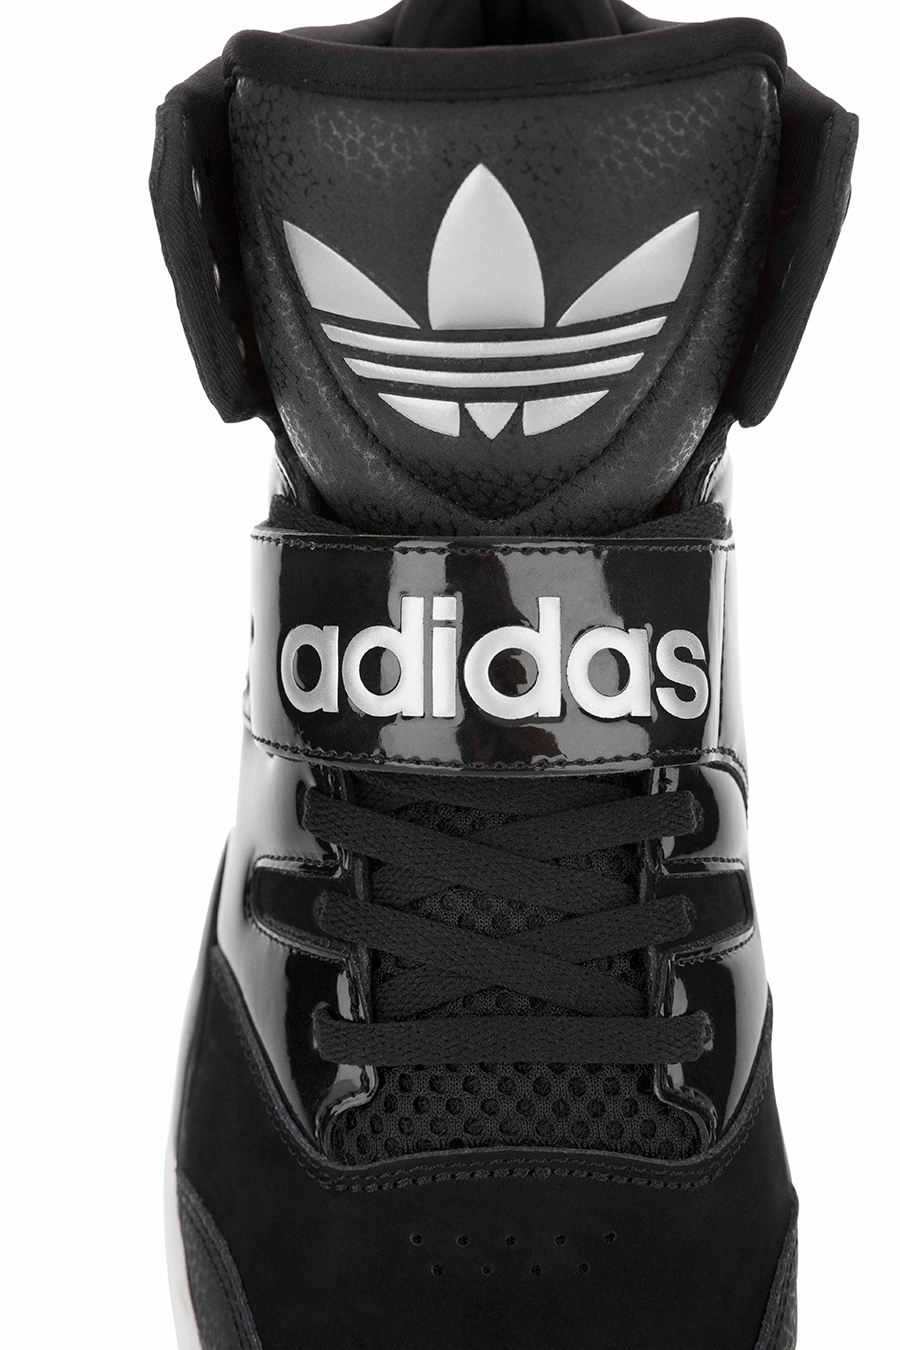 Adidas Originals Hackmore Black White Silver 1